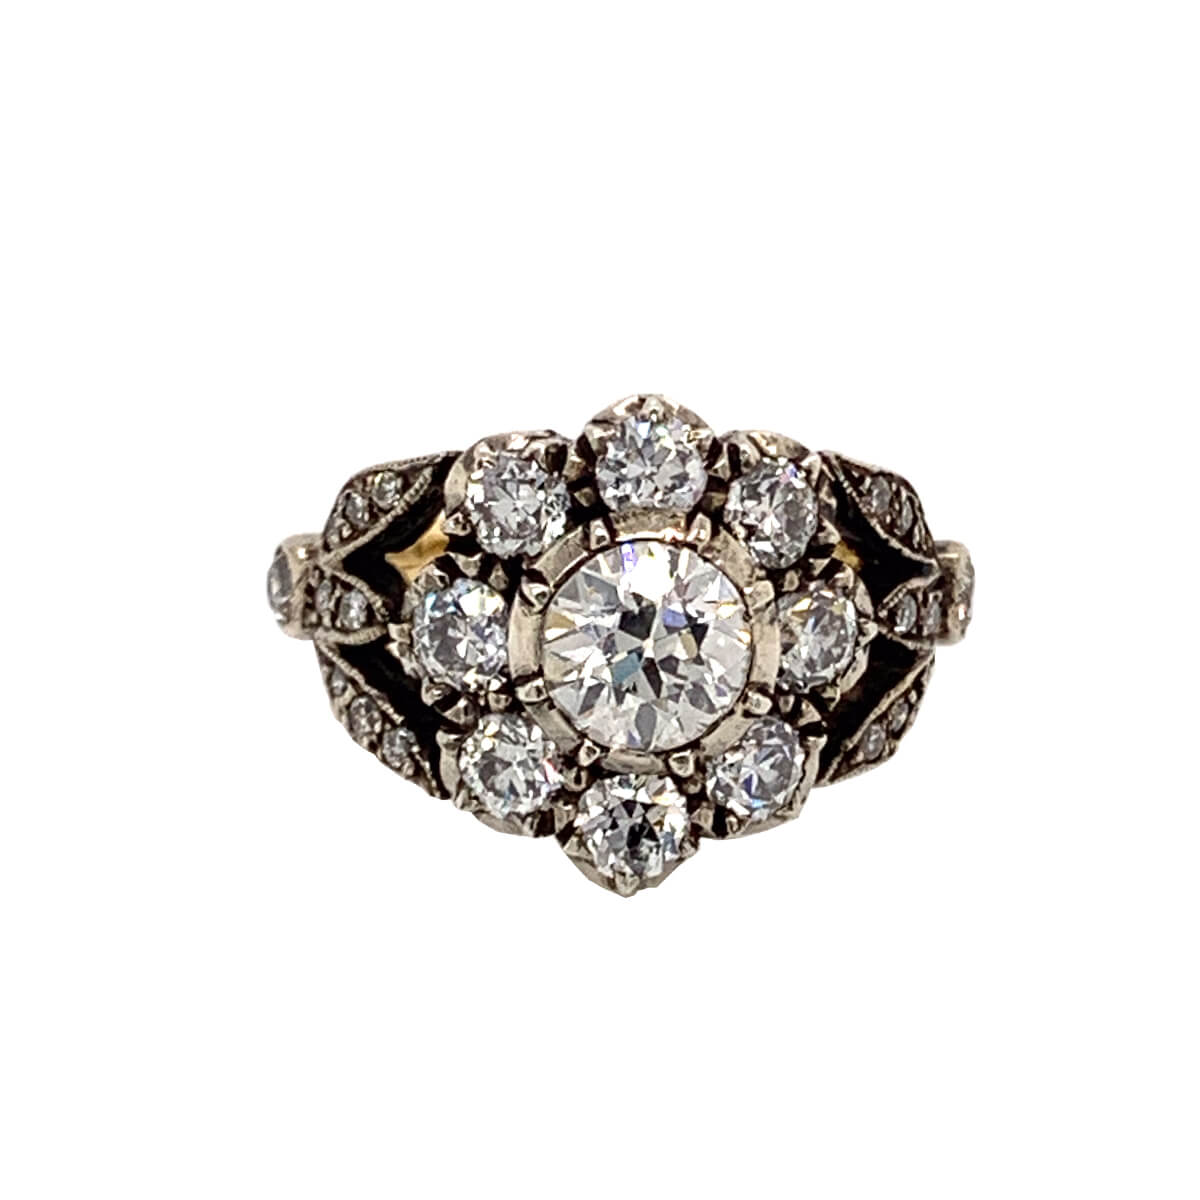 Georgian Style Diamond Cluster Ring